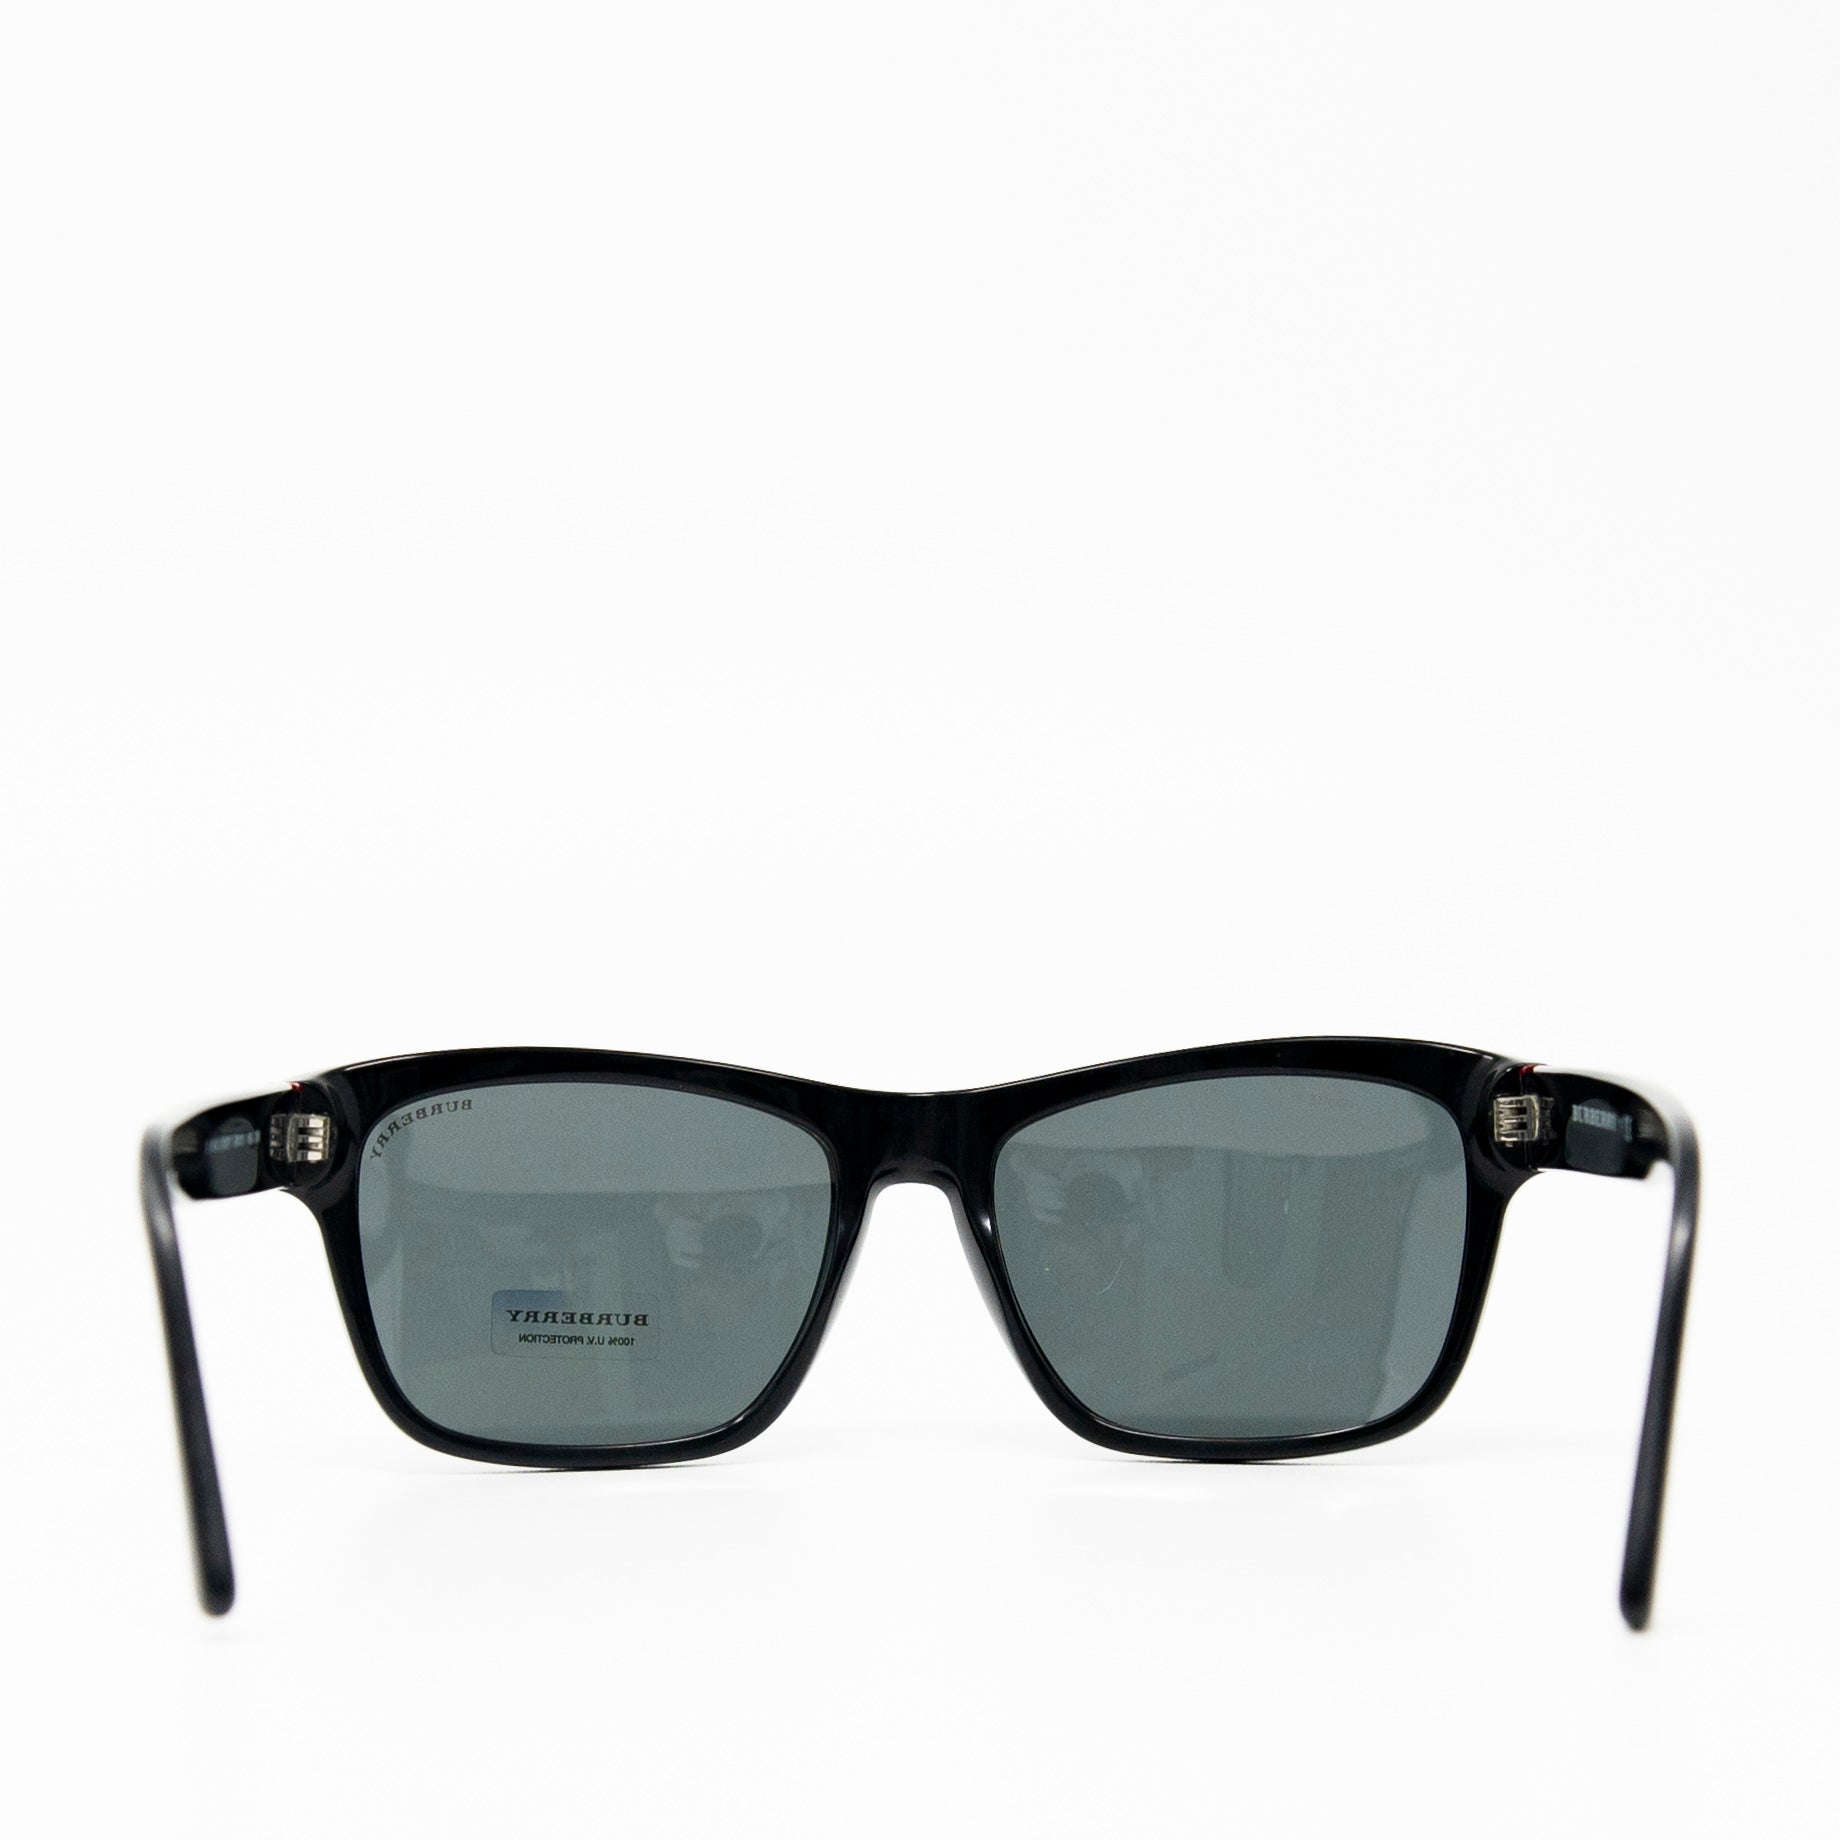 Burberry Black Acetate Sunglasses